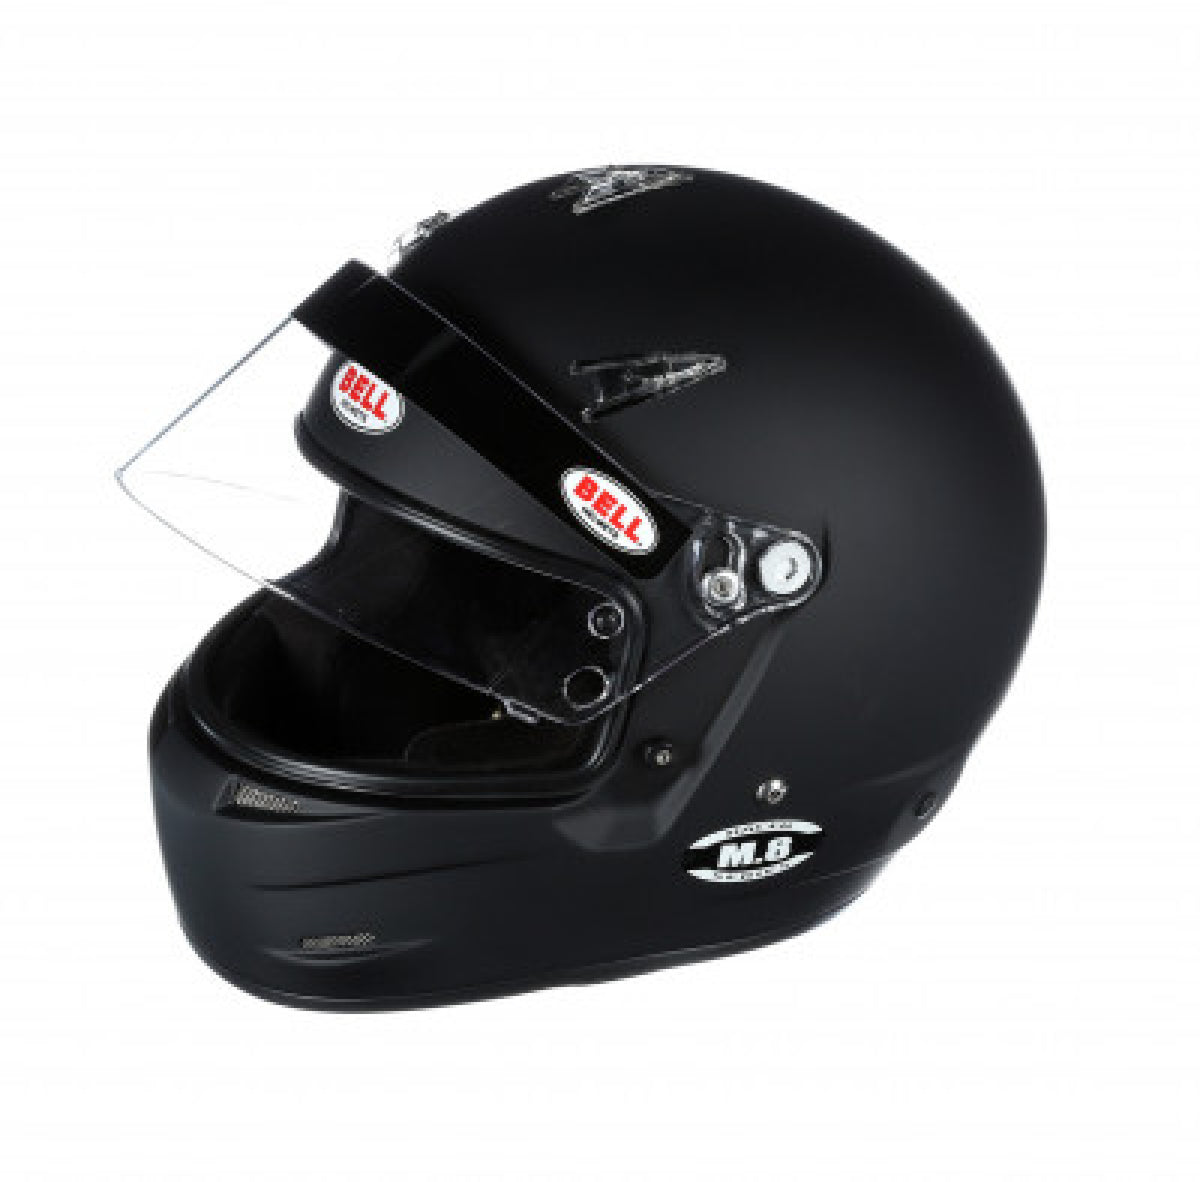 Bell M8 Racing Helmet-Matte Black Size Extra Small